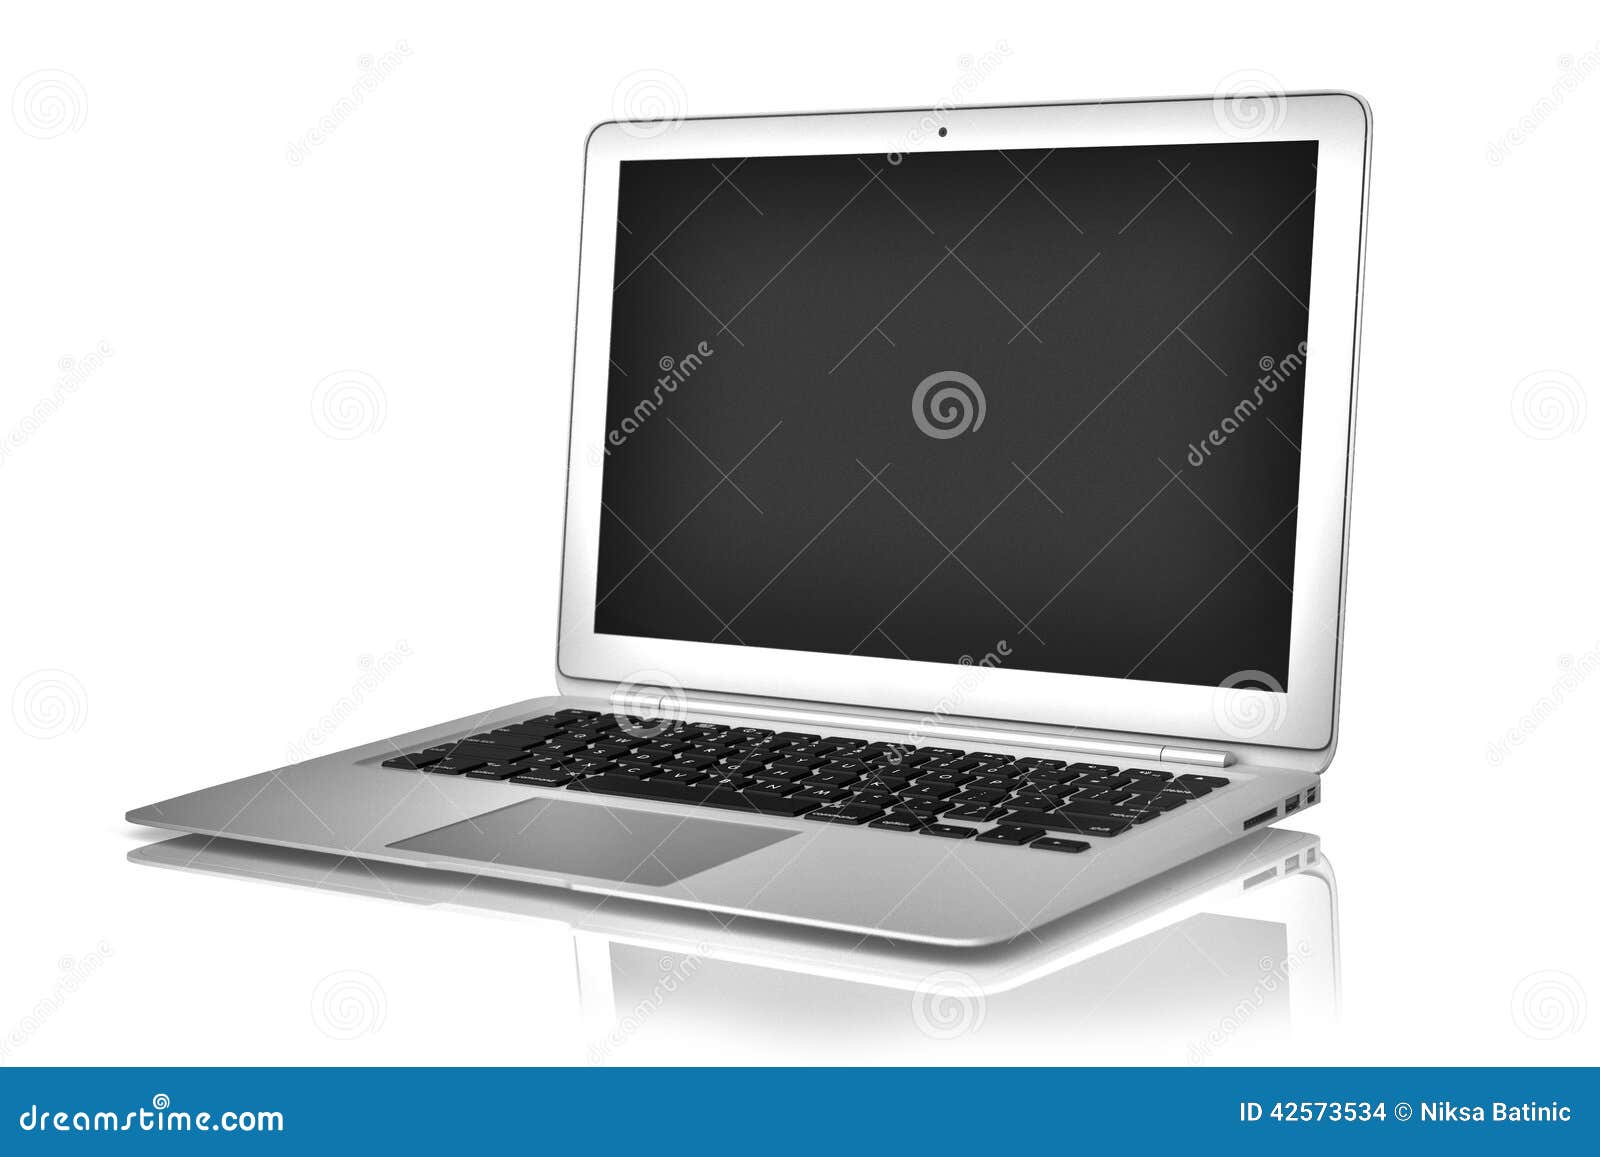 macbook air laptop